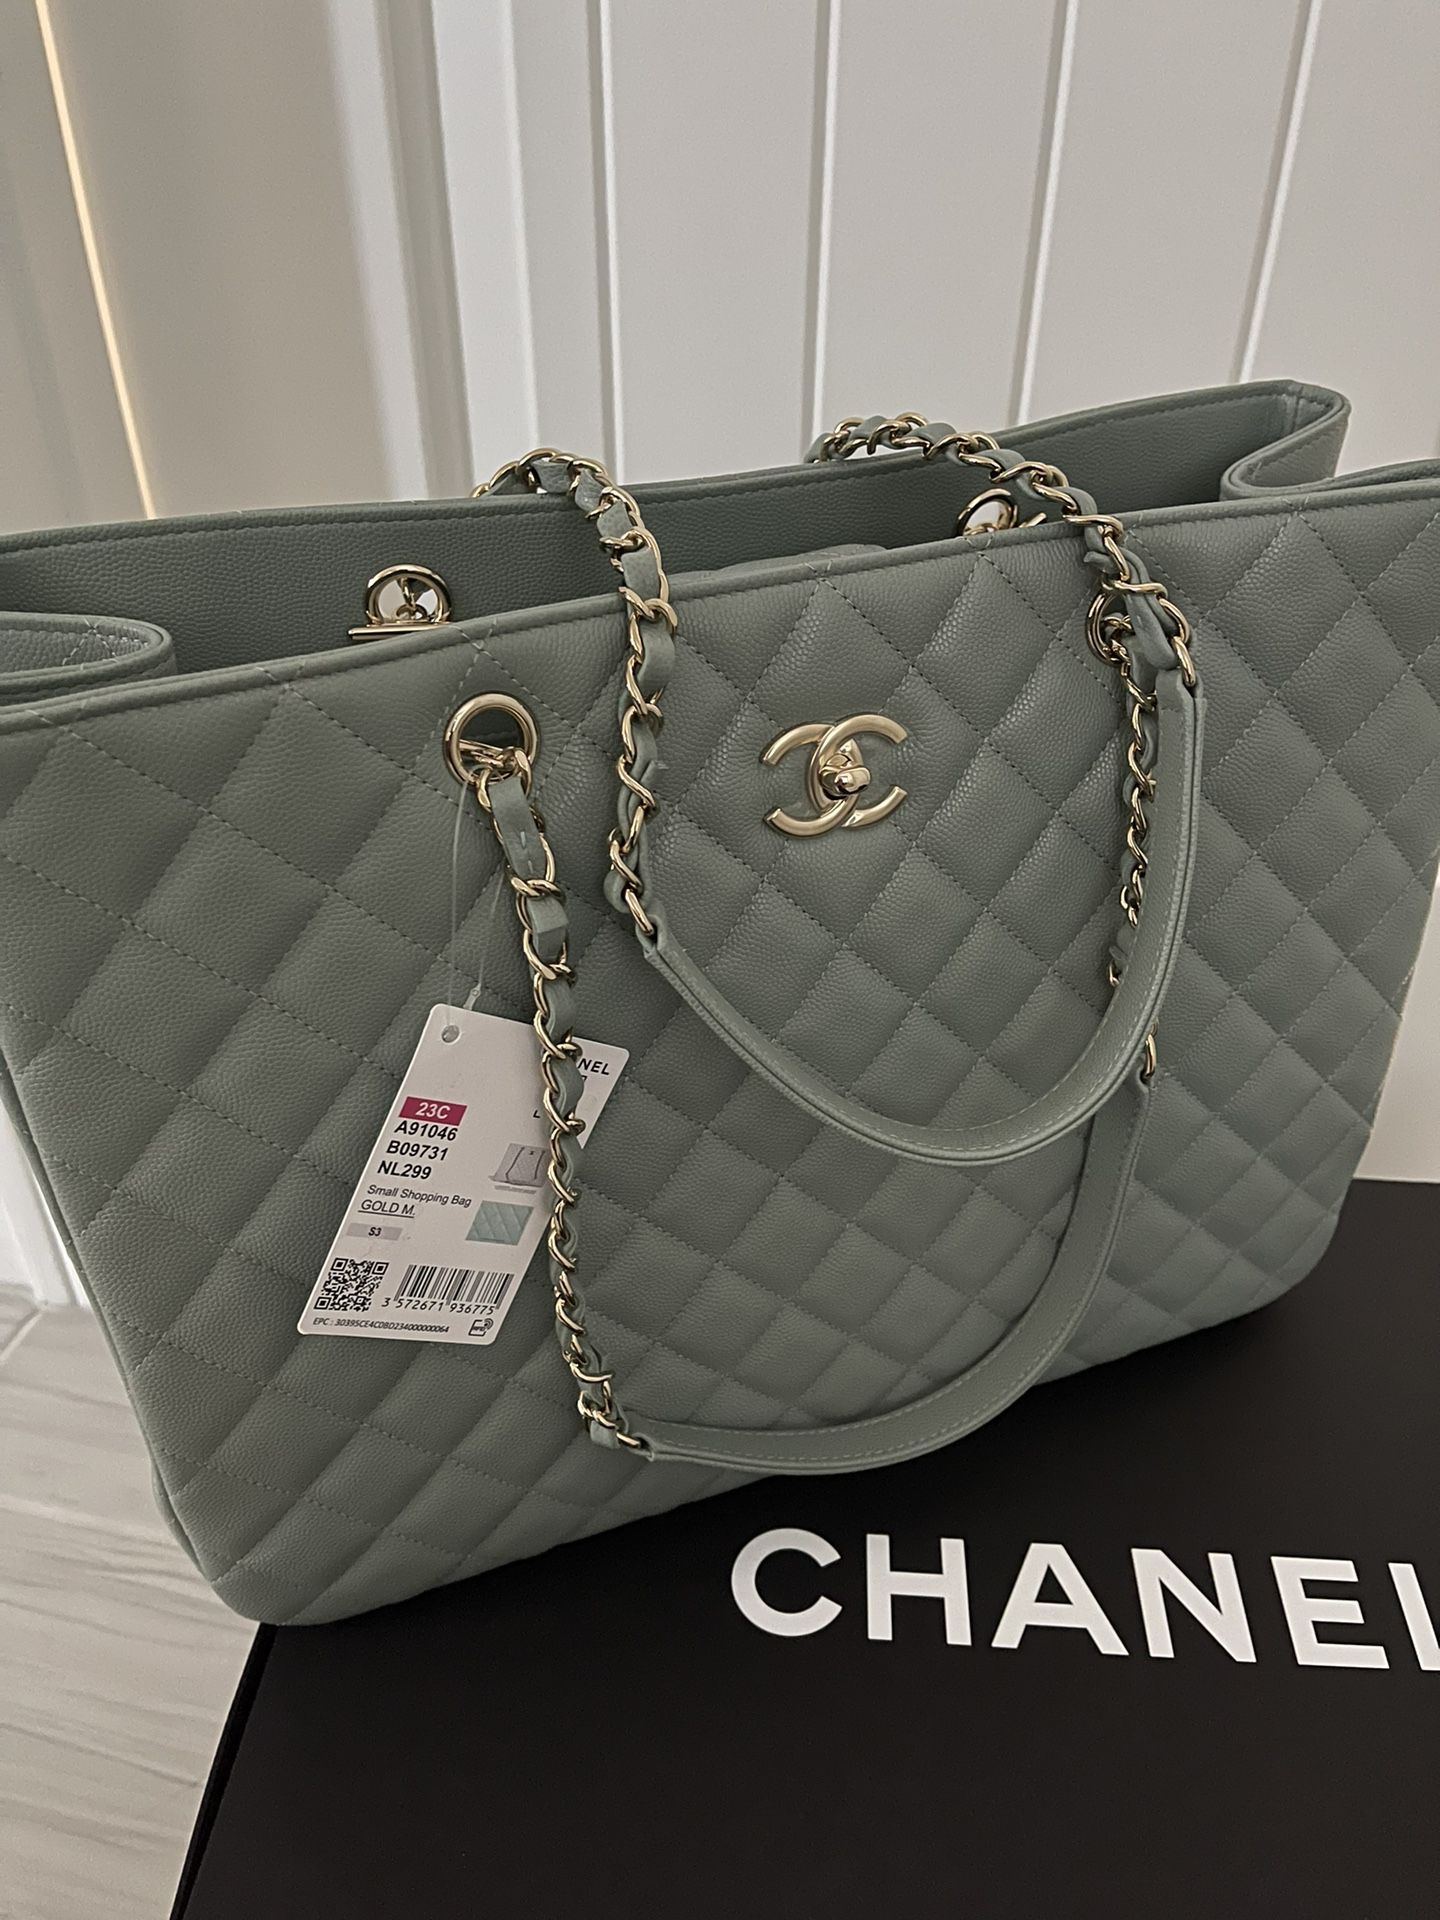 Authentic Chanel Caviar Shopping Handbag Purse Tote